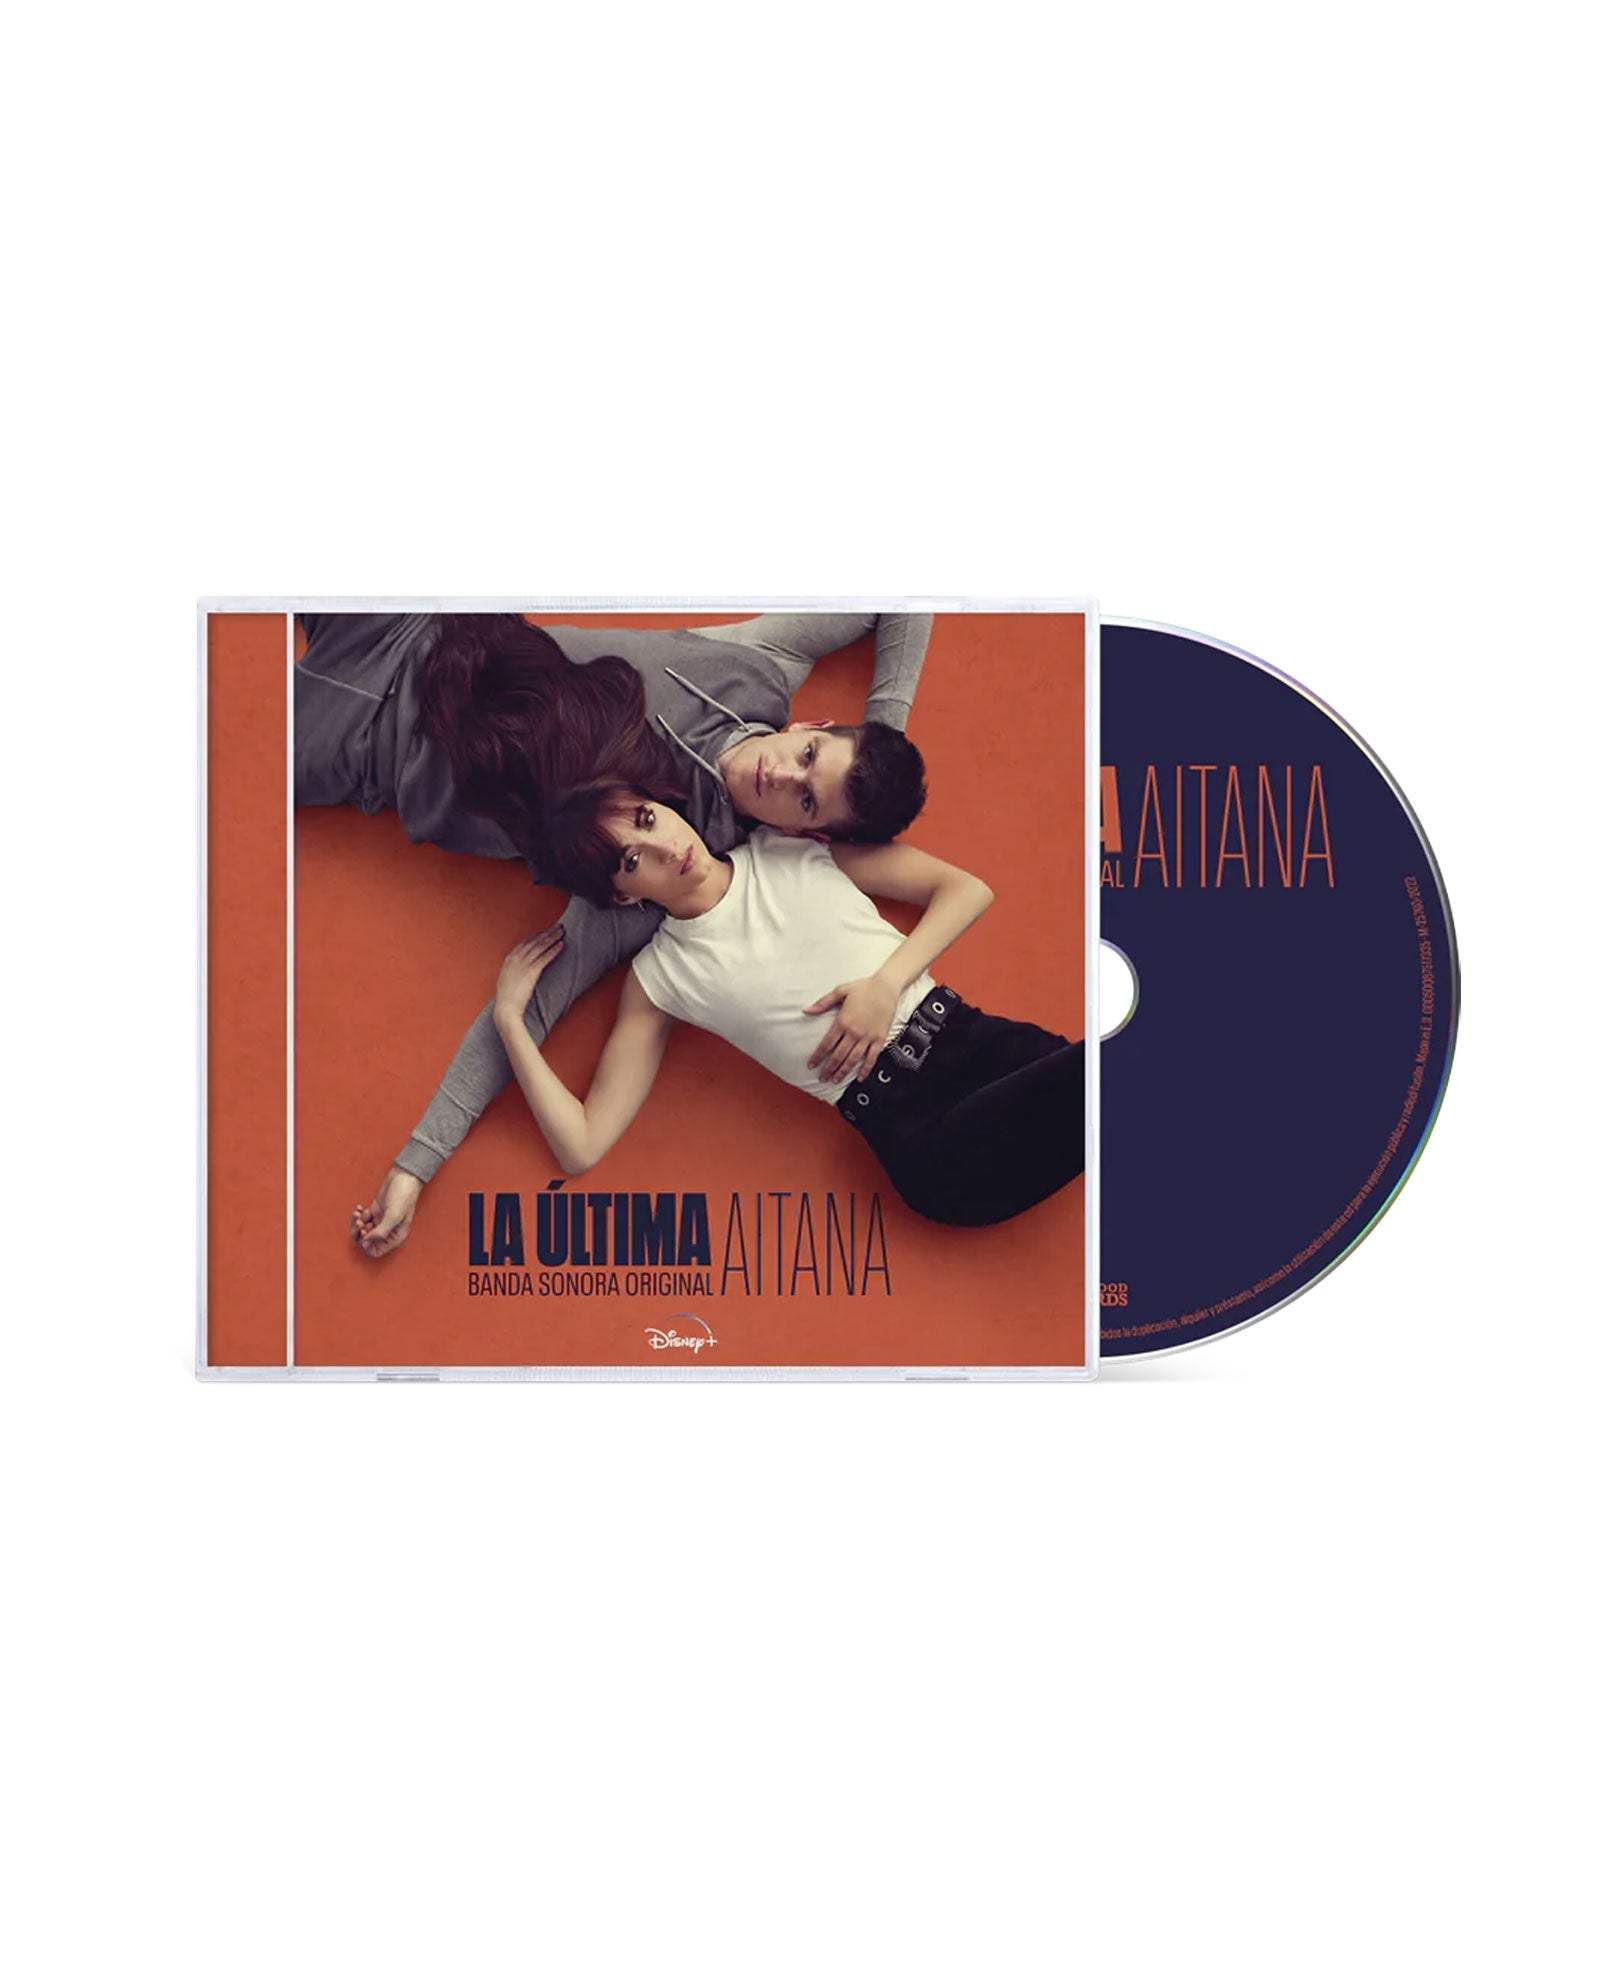 Aitana - BOX "BSO La Última" CD + Tote bag + Planificador + Pegatinas - Rocktud - Rocktud